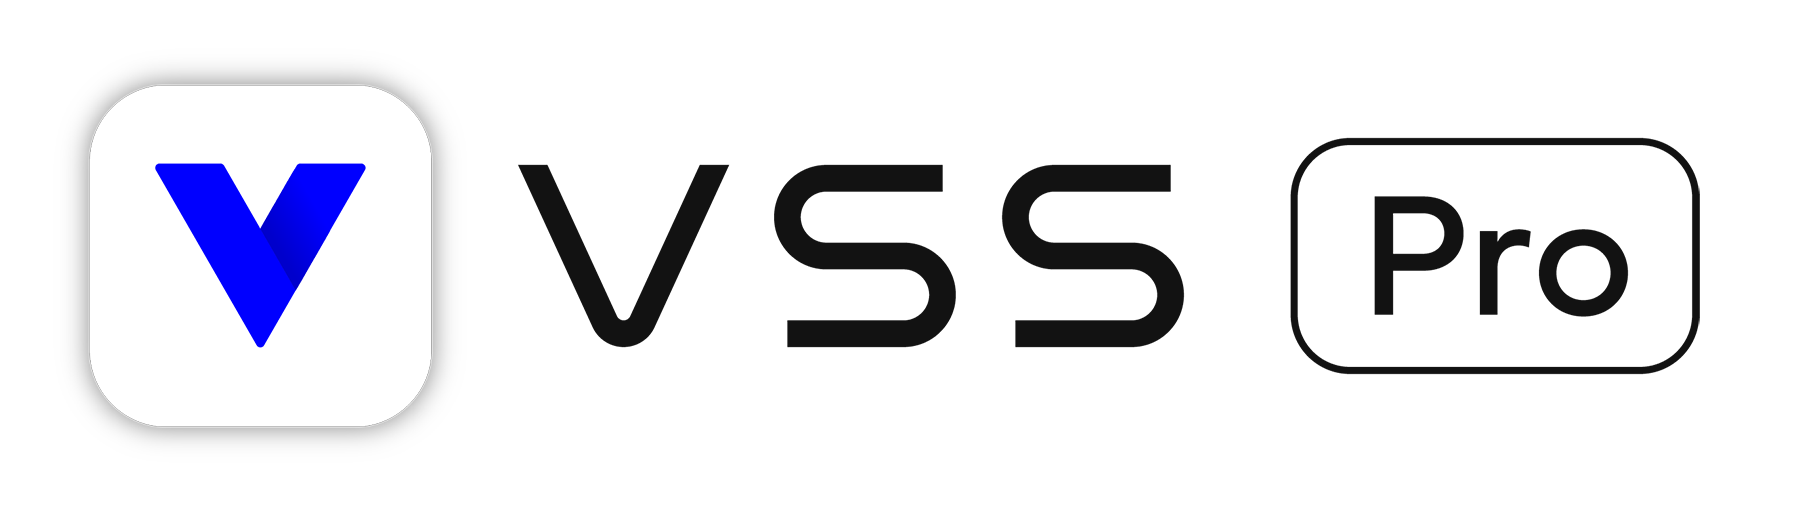 Logo VSS Pro Vivotek